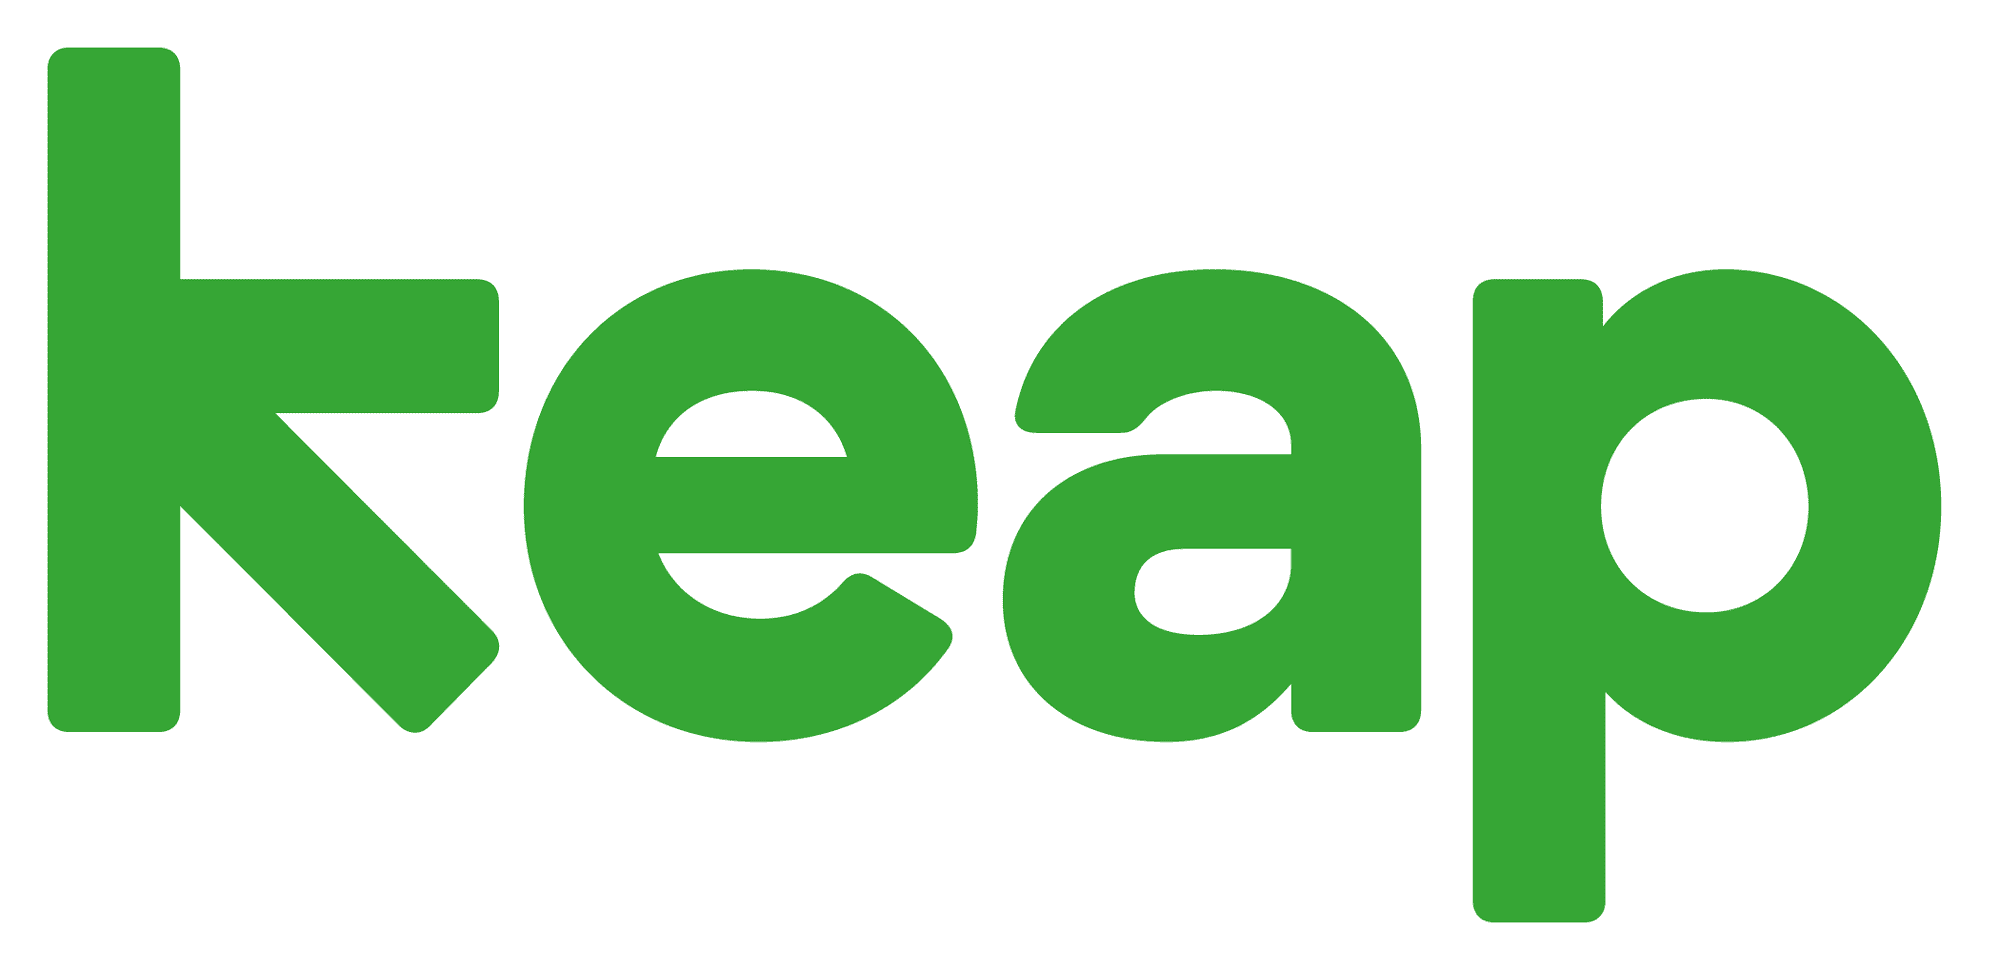 keap logo Best Software Reseller | Best Software Providers in India